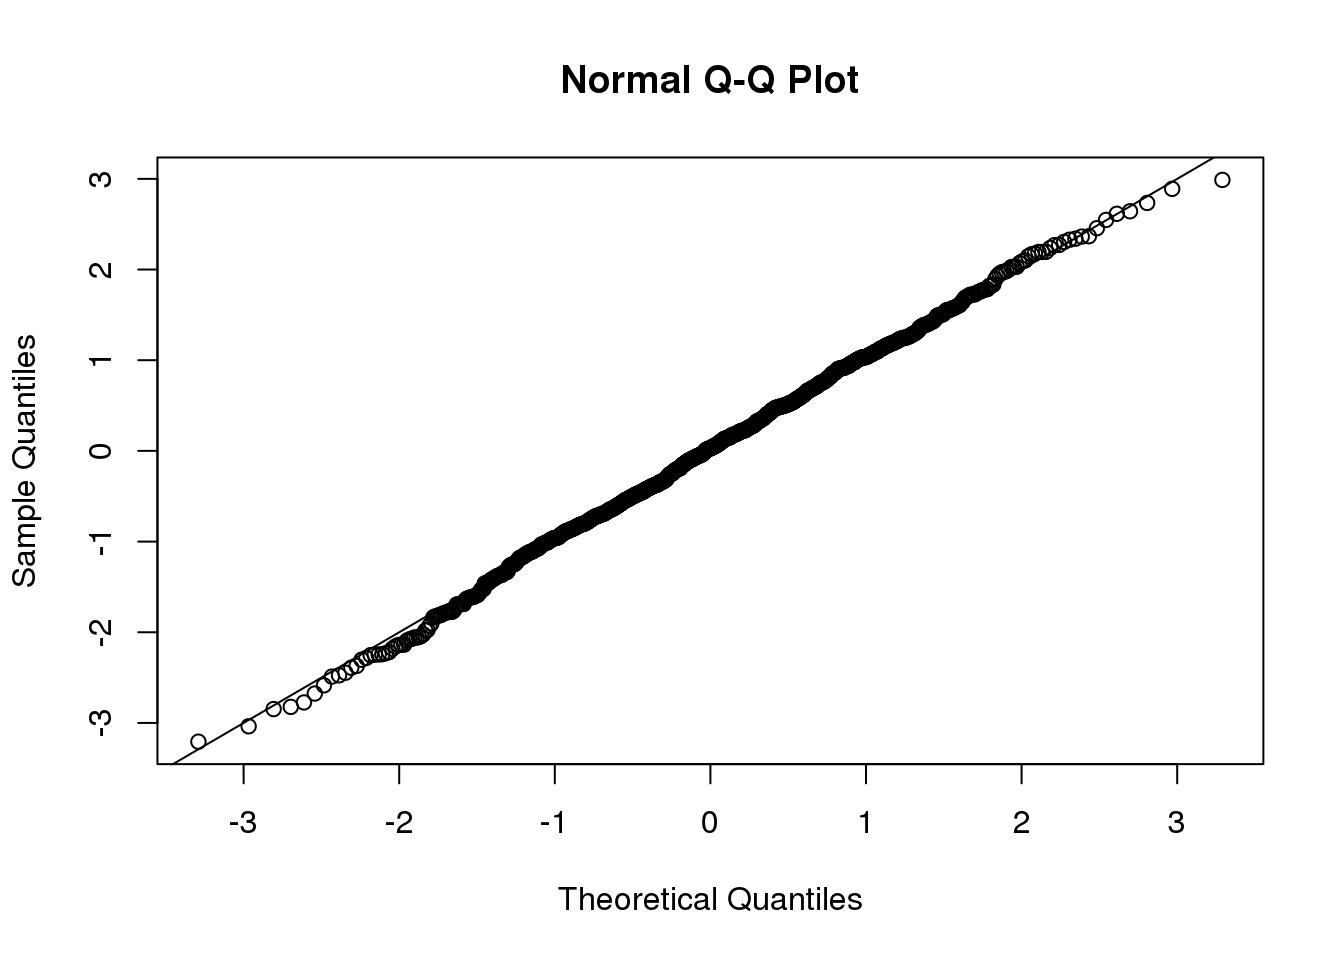 Quantile-quantile plot comparing 1000 Monte Carlo simulated t-statistics to theoretical normal distribution.